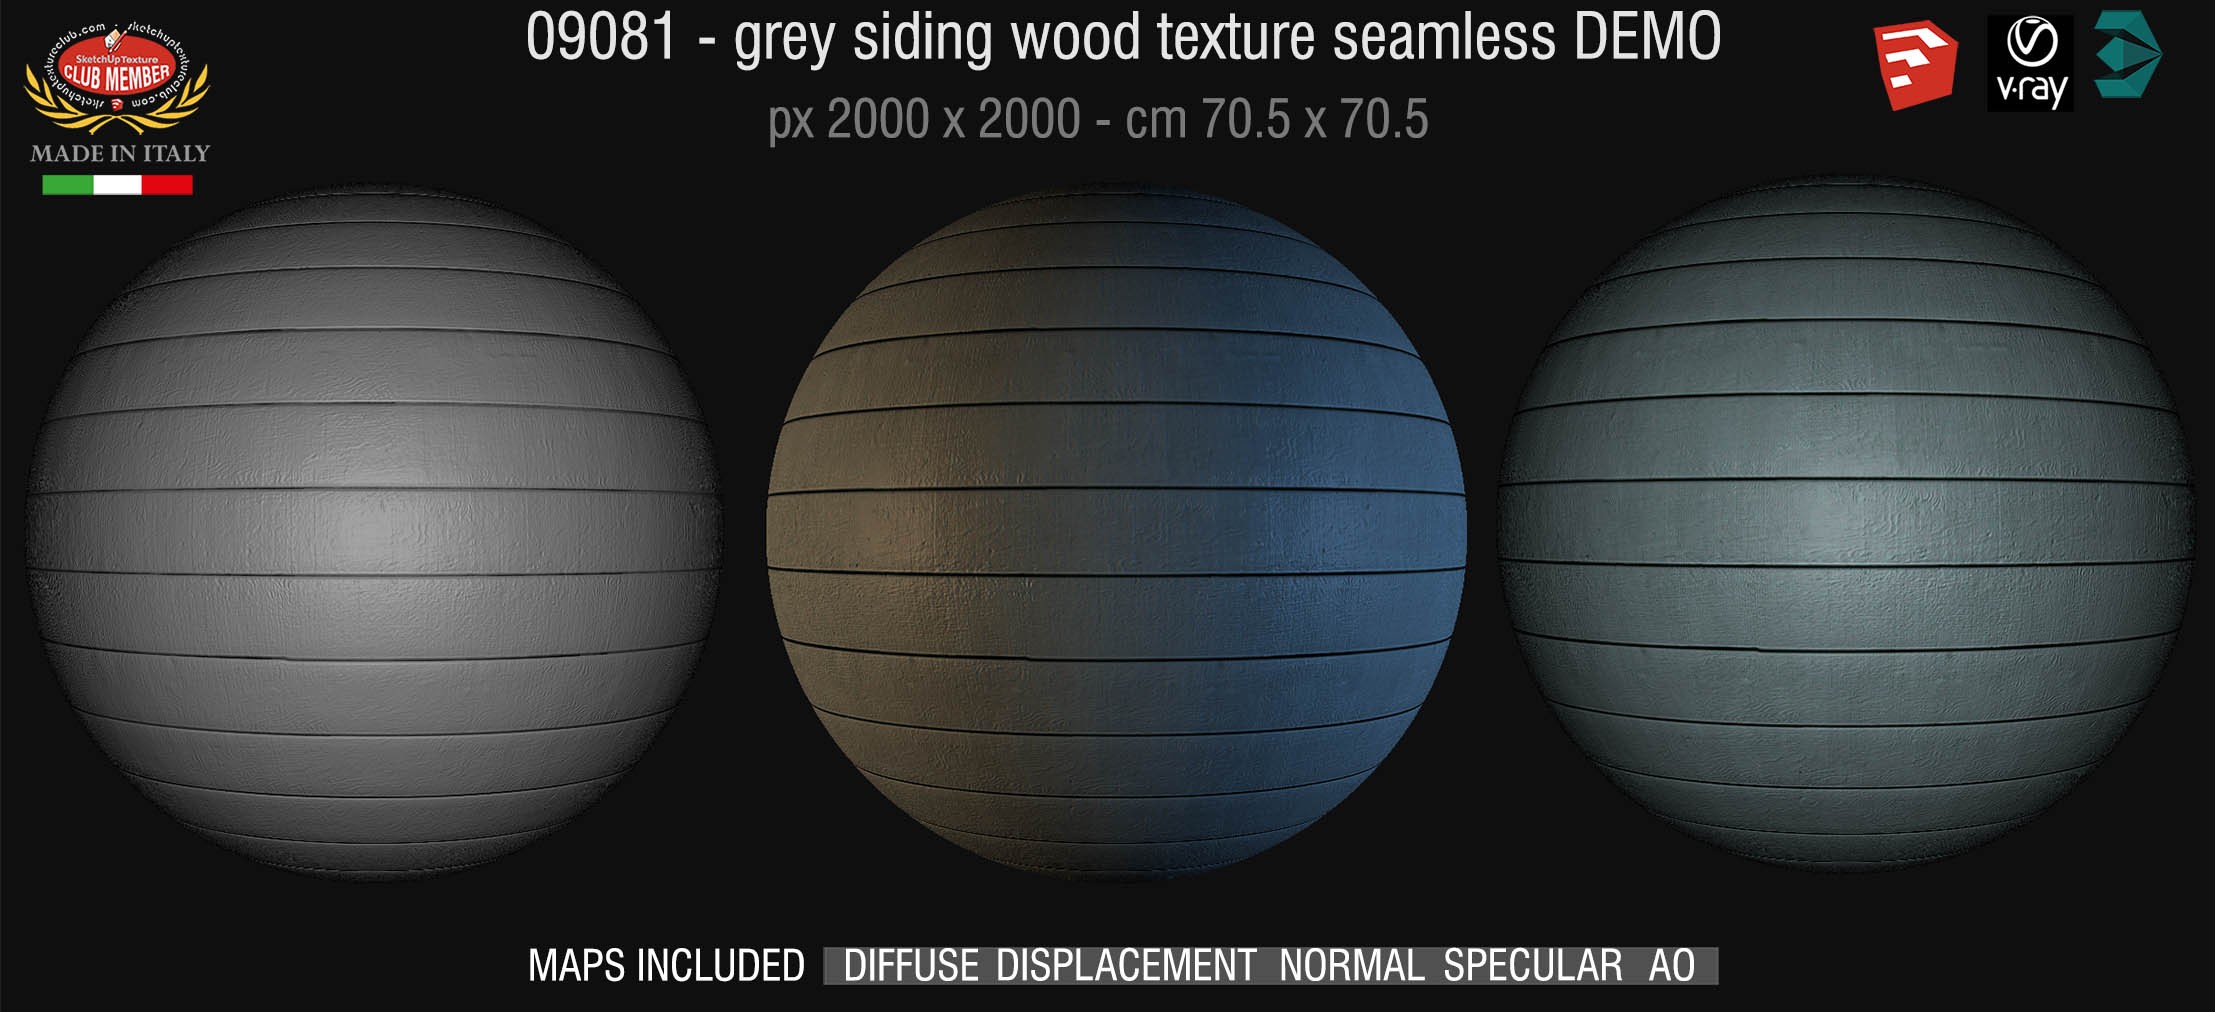 09081 HR Grey siding wood texture + maps DEMO